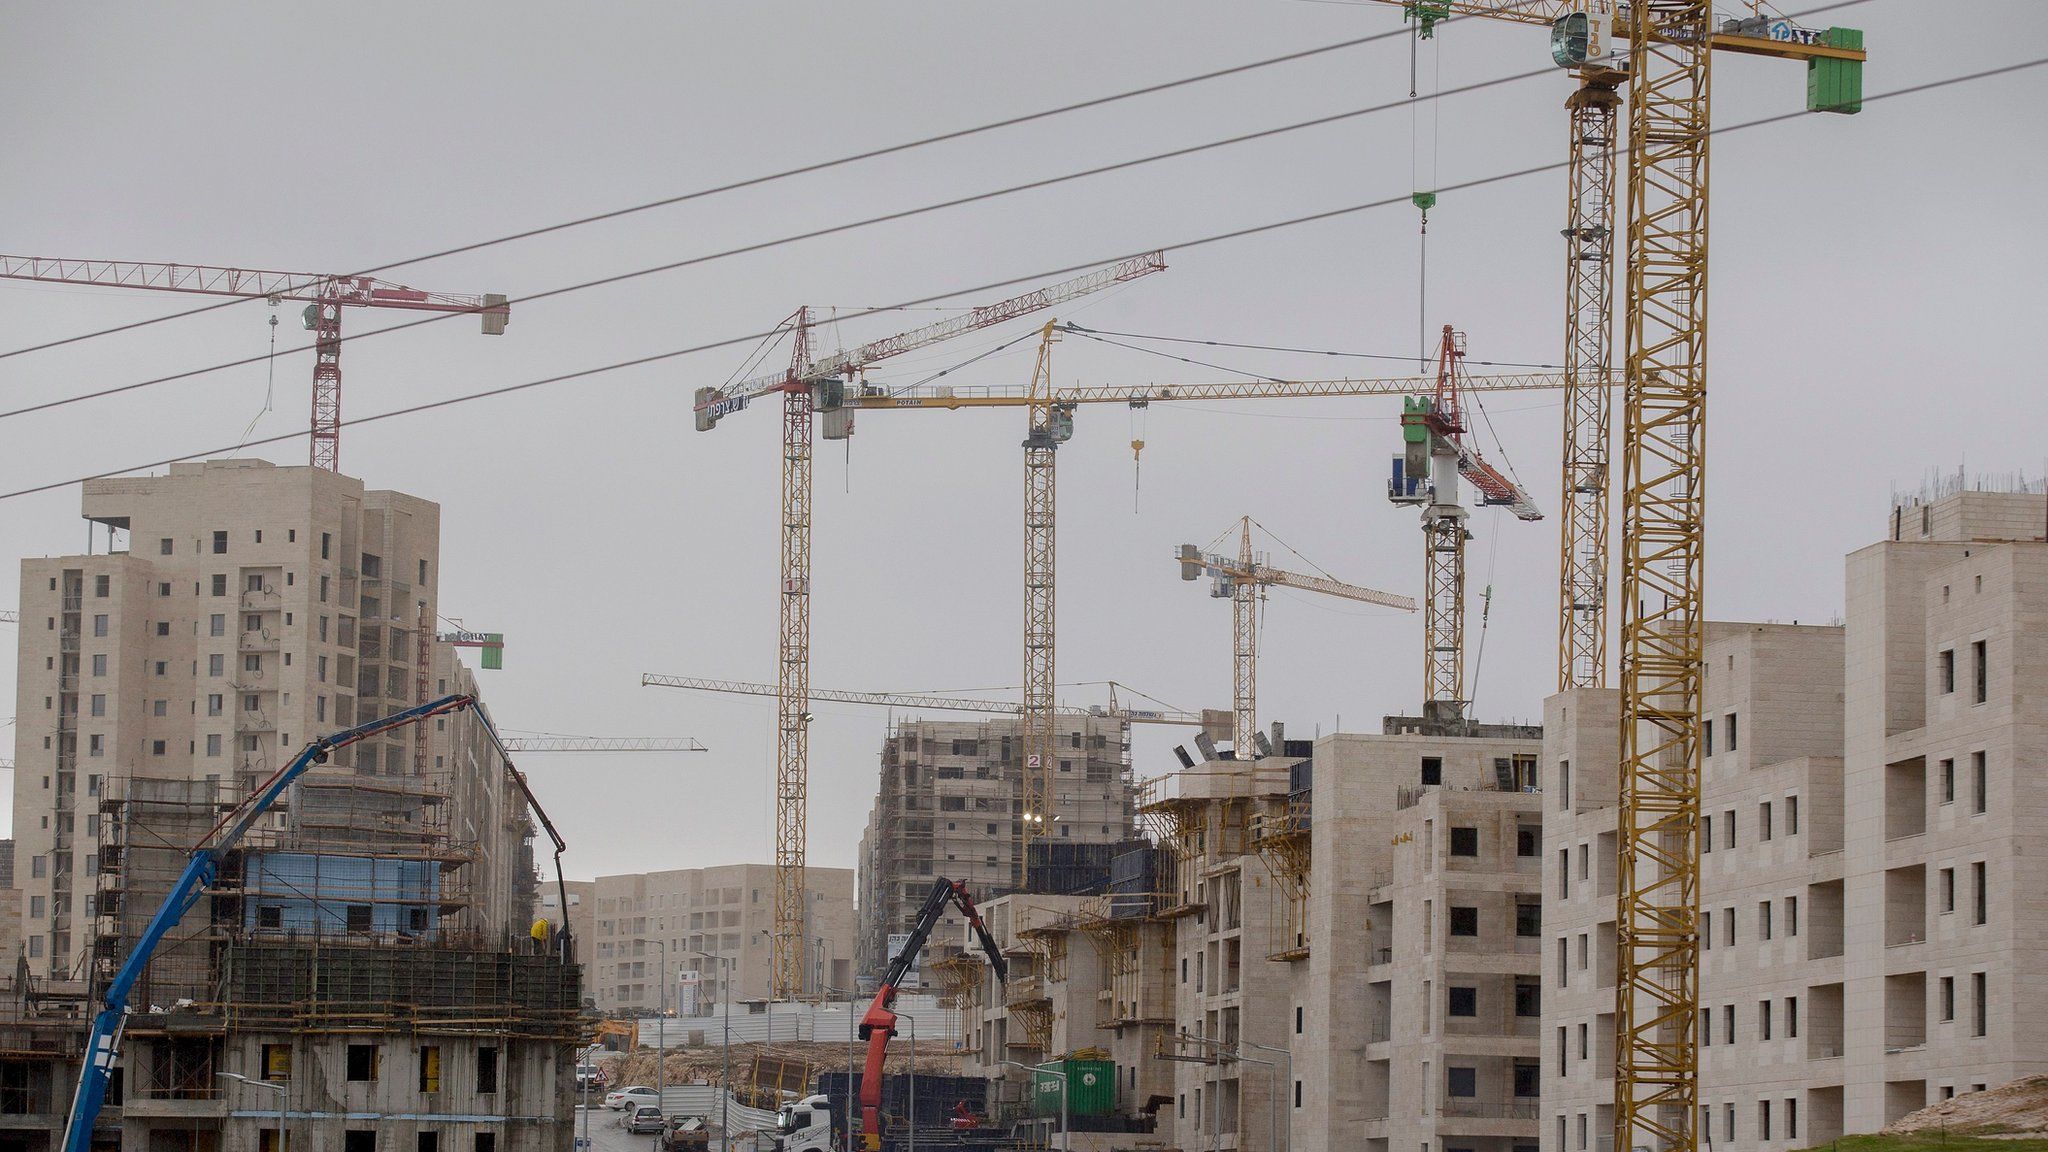 Construction at the Har Homa settlement in East Jerusalem (27 December 2016)